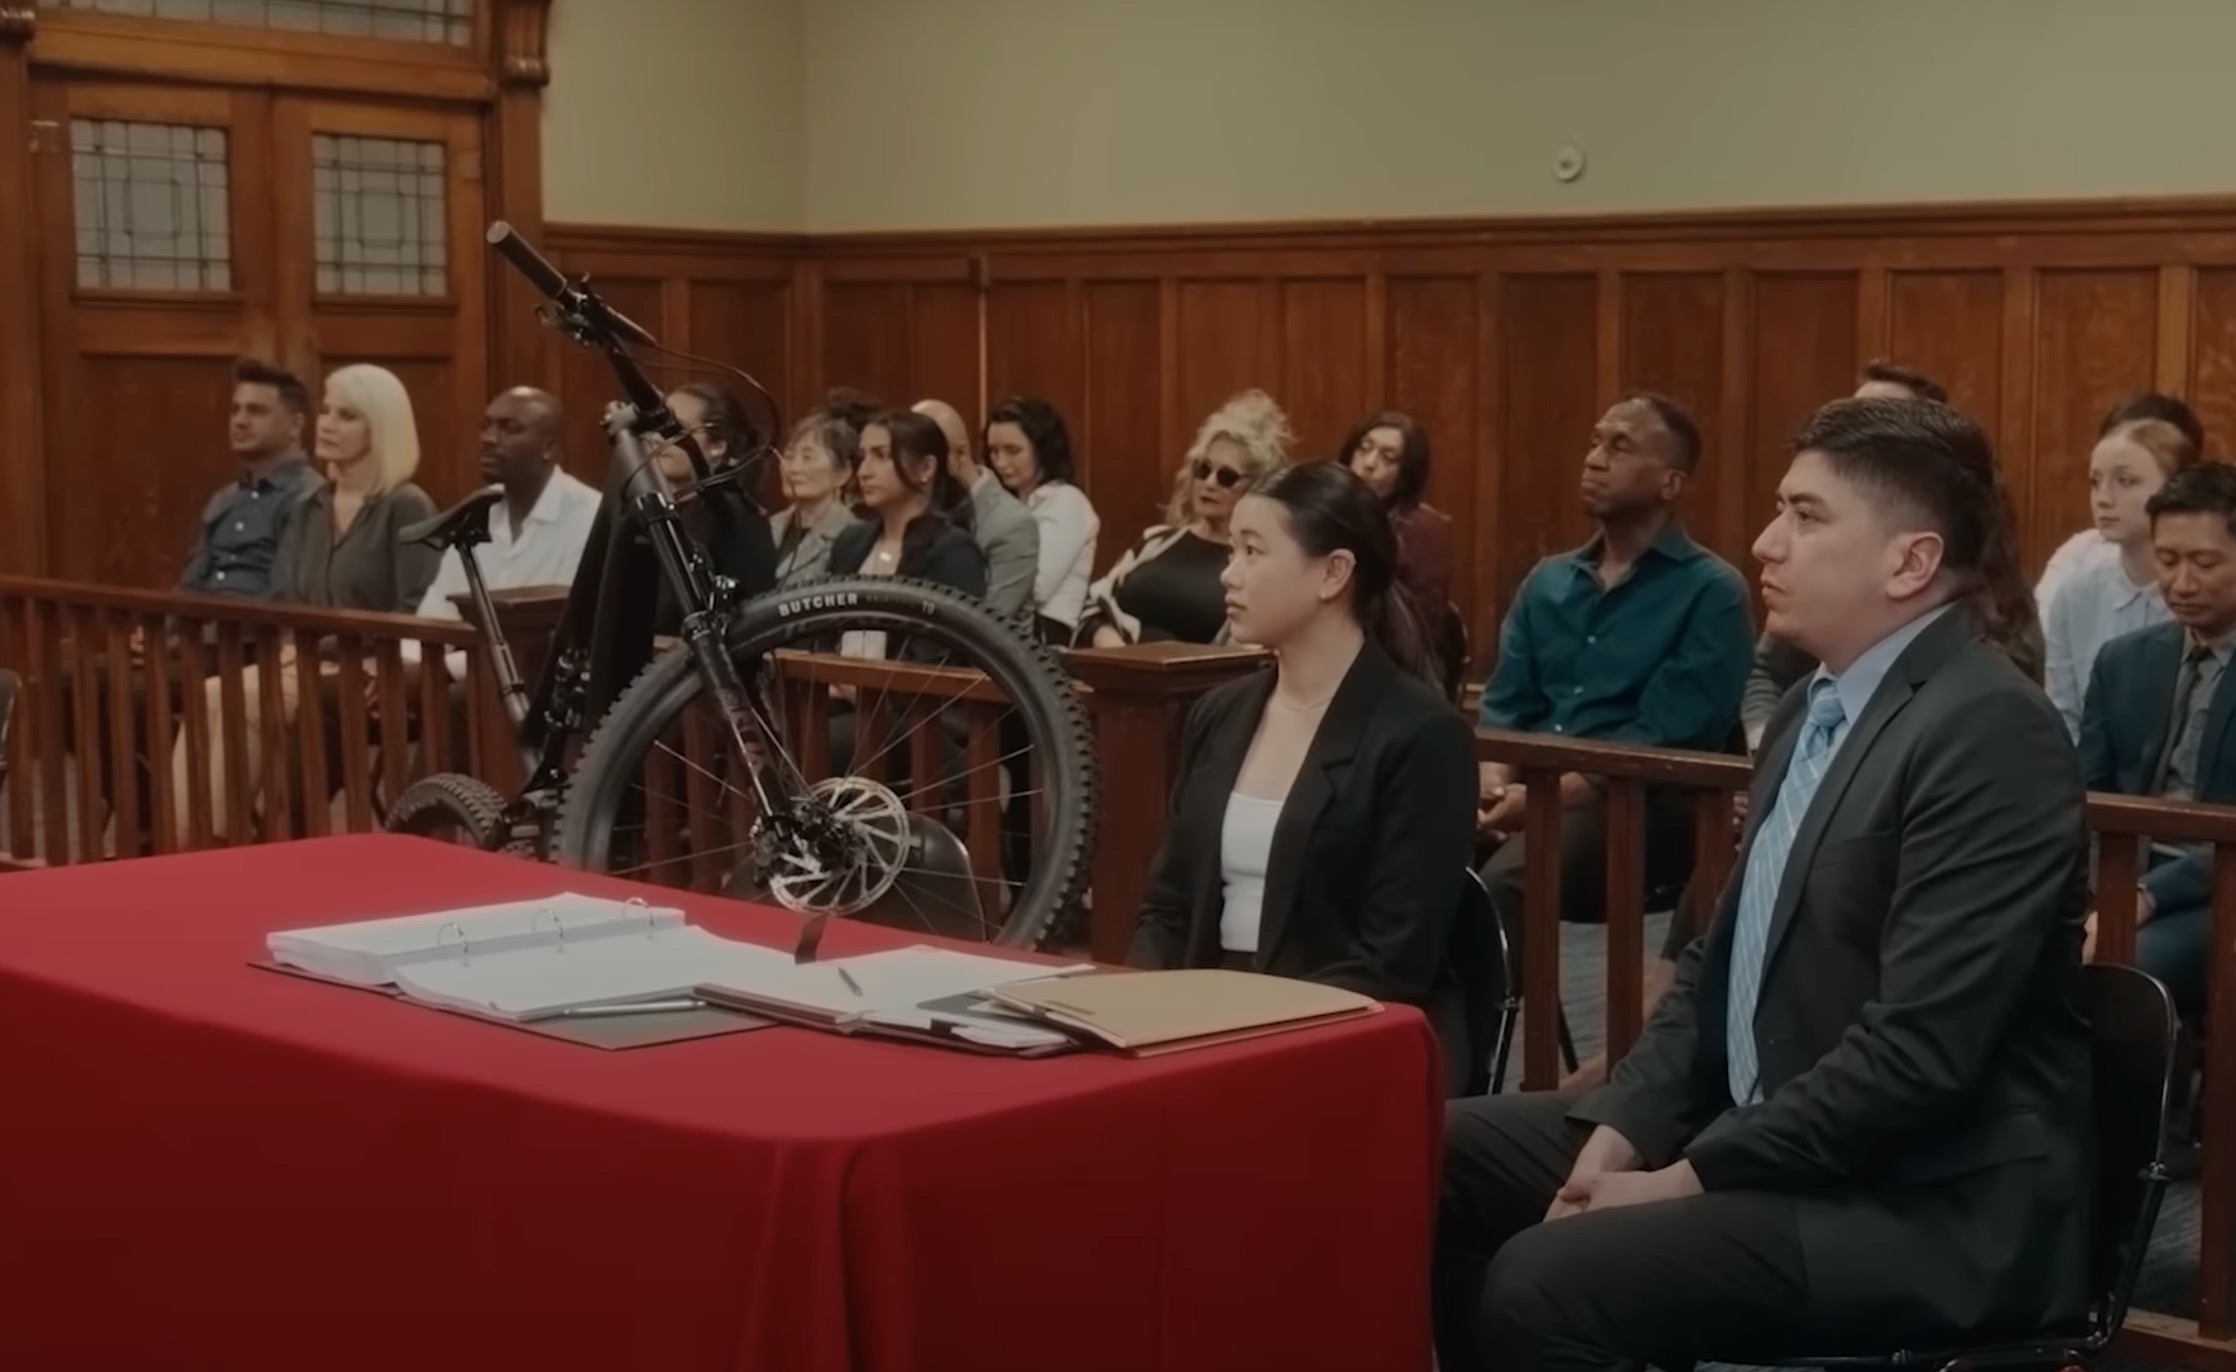 E-Bike Brought To Court To Determine Legitimacy